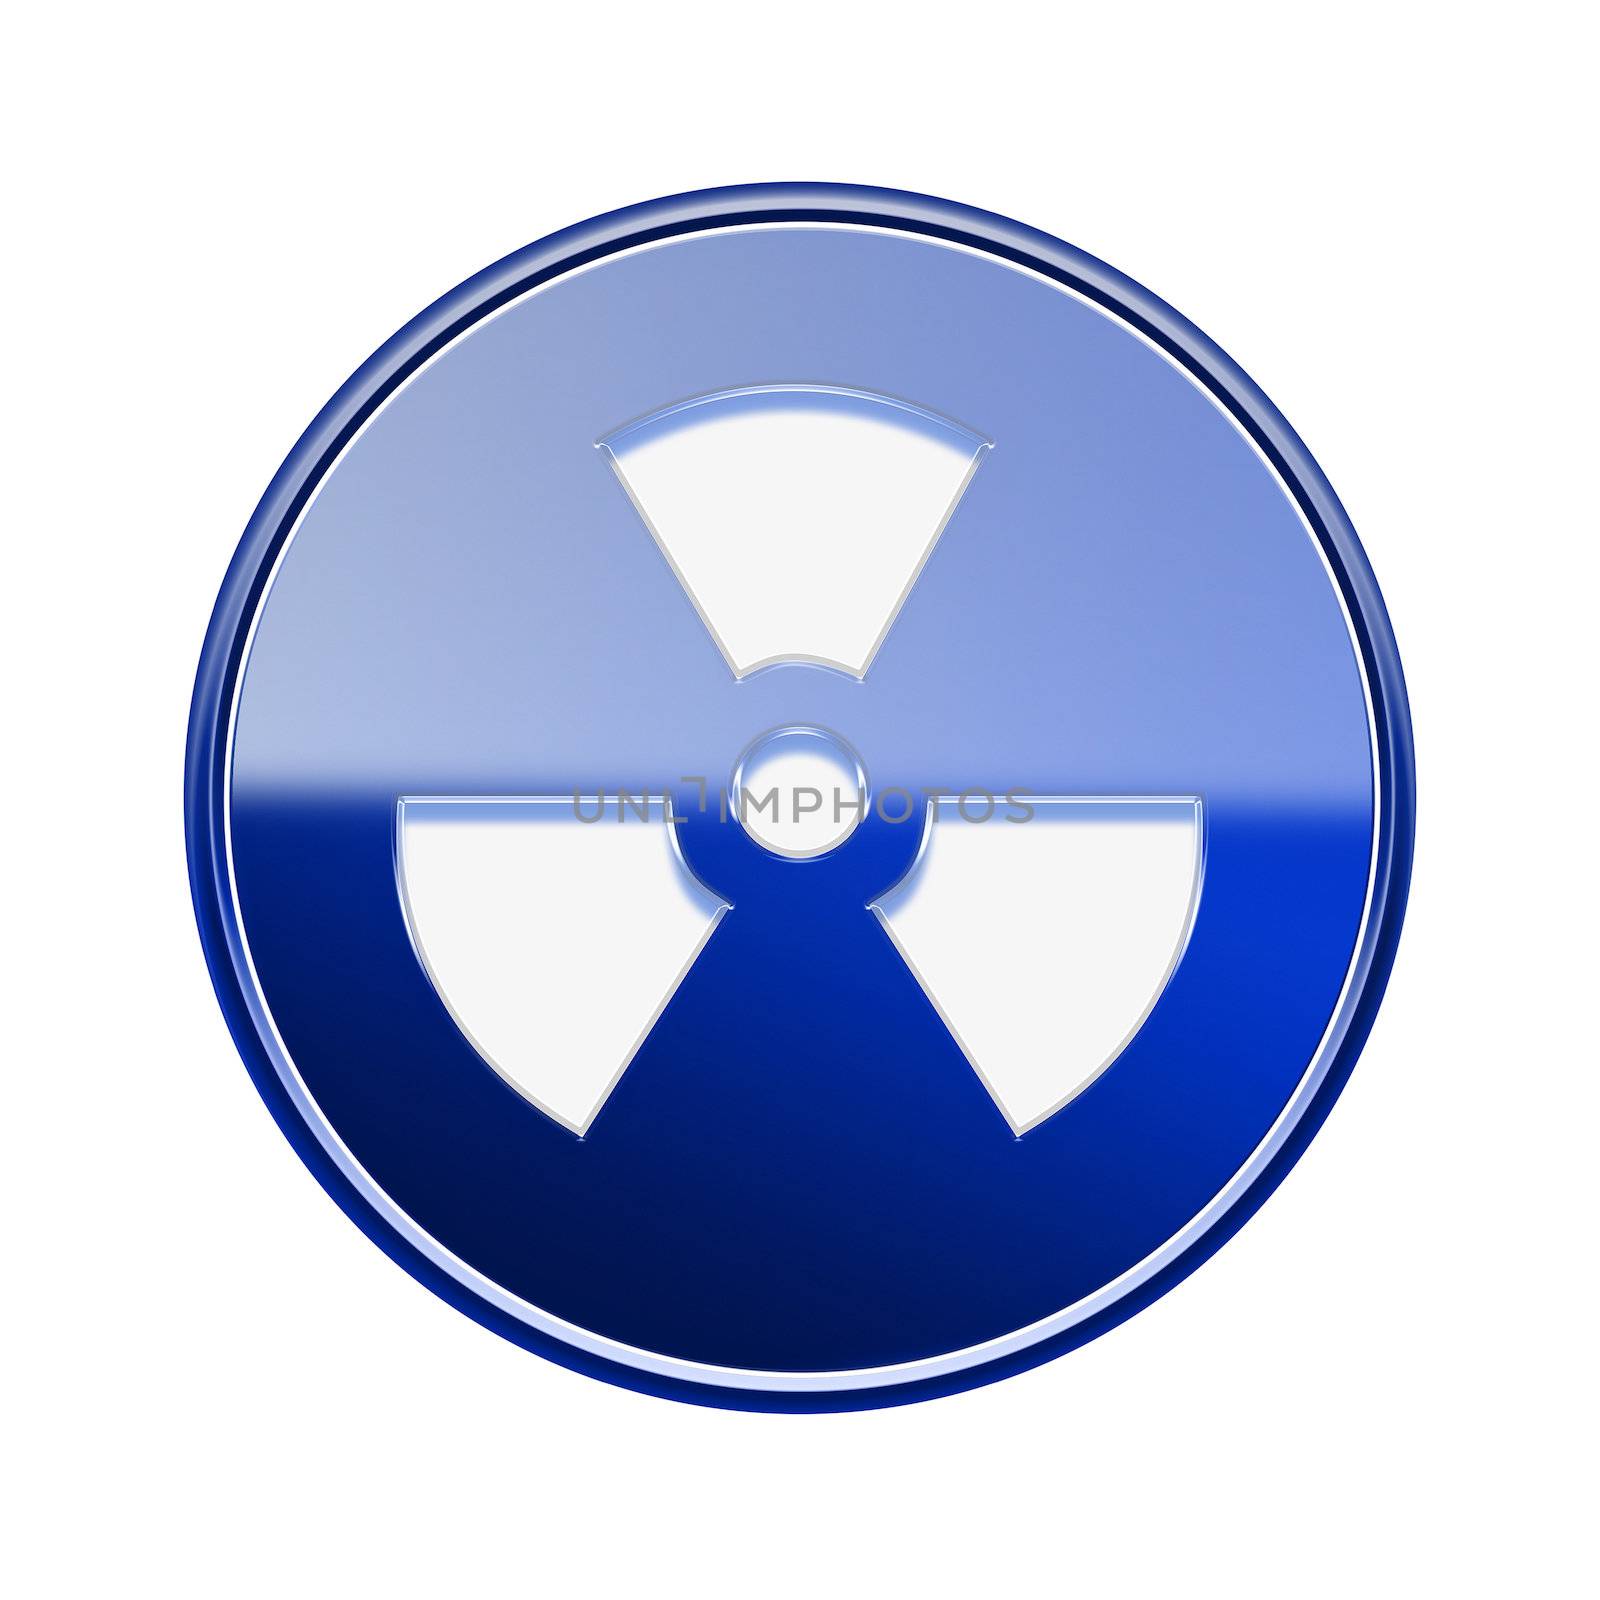 Radioactive icon glossy blue, isolated on white background.